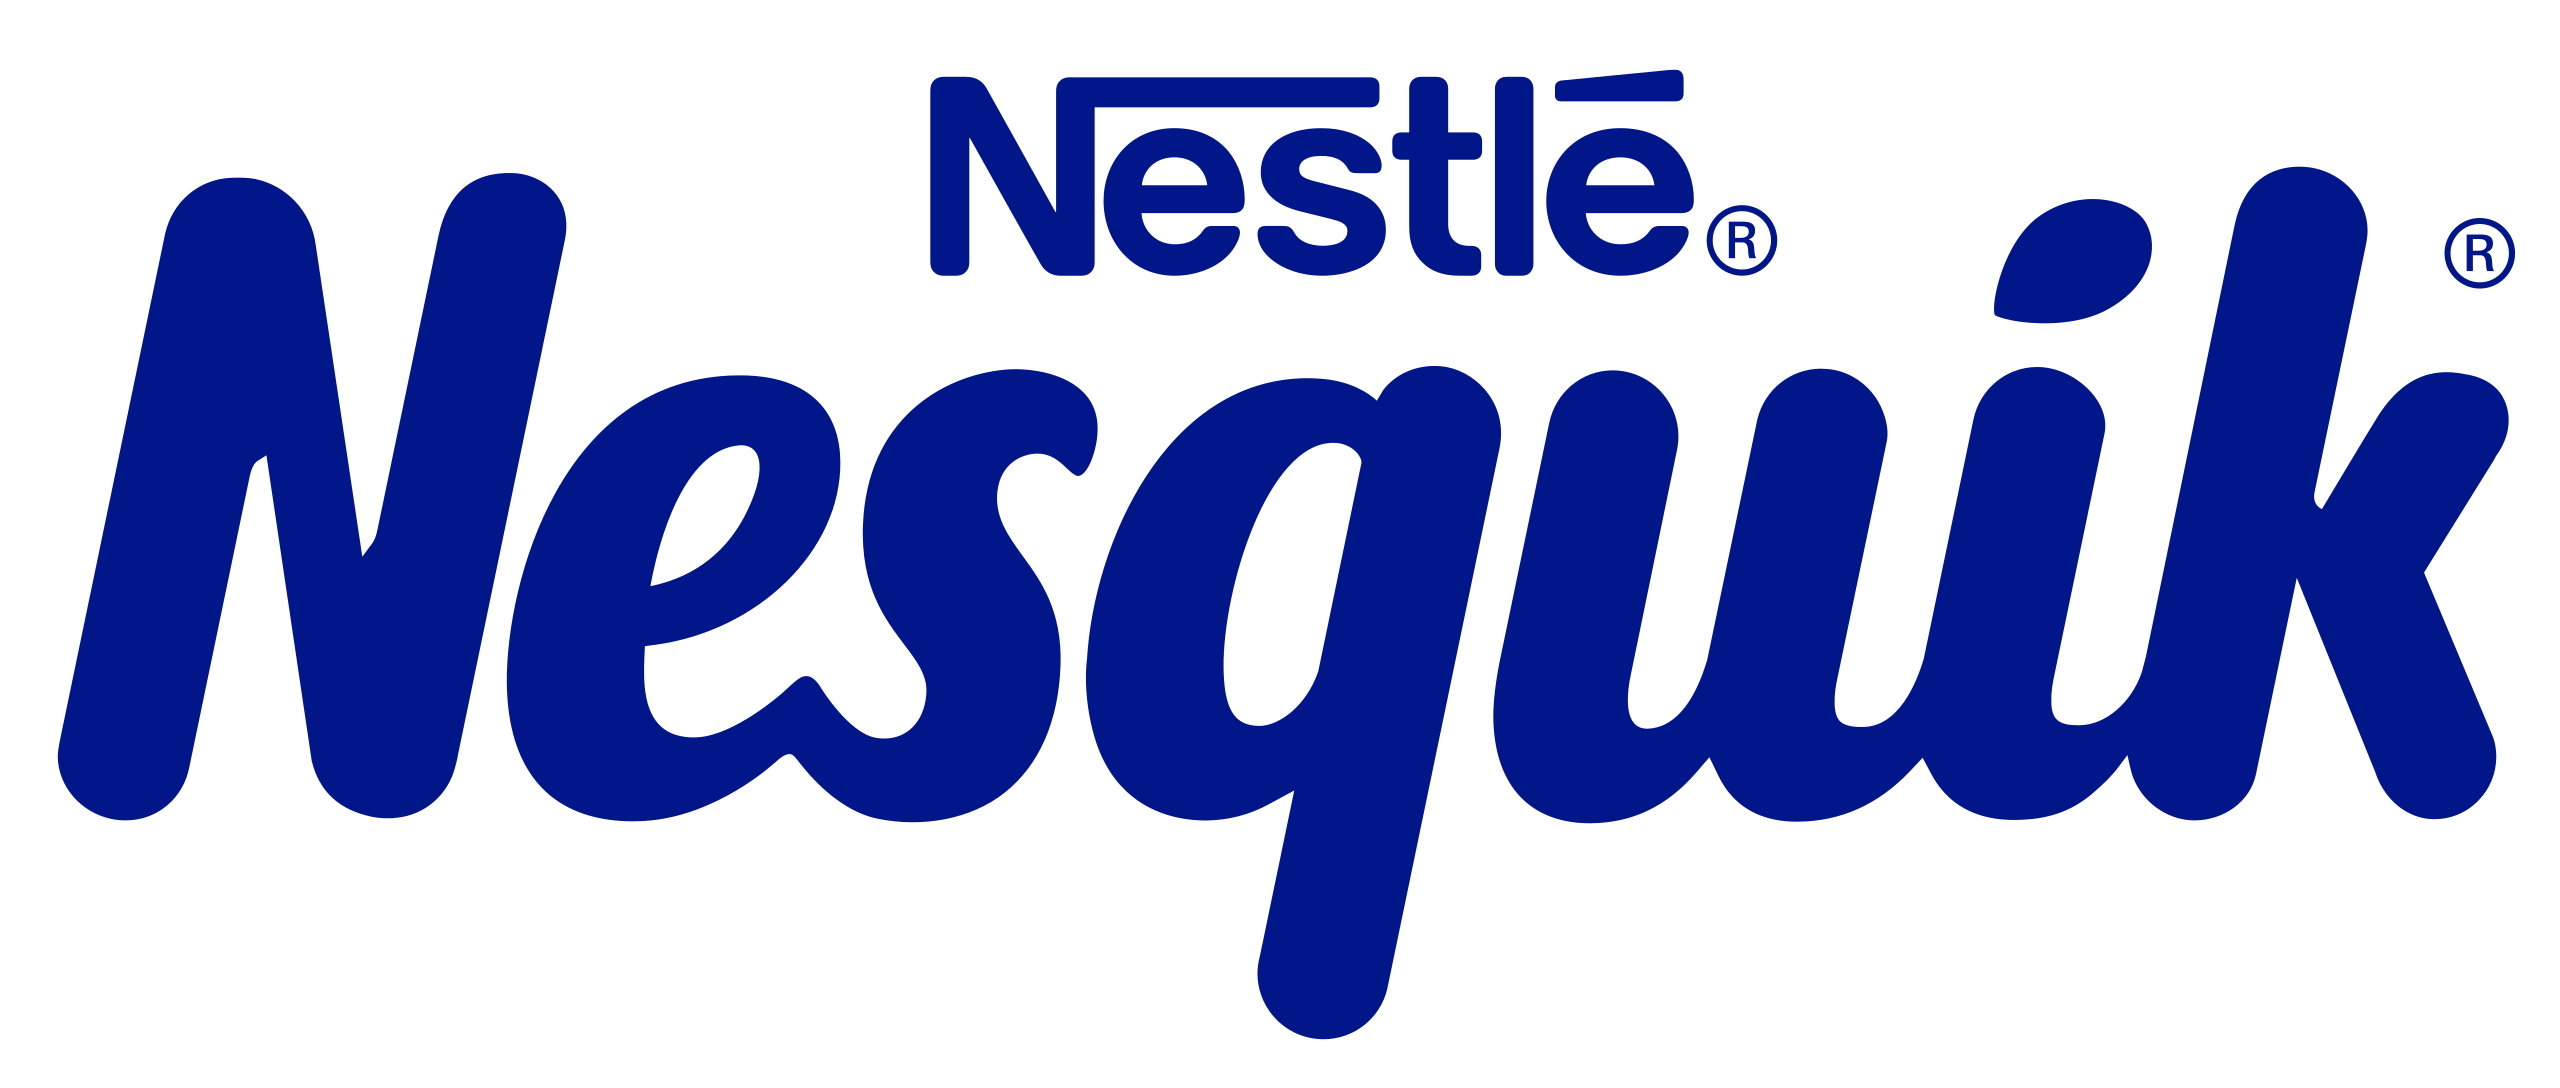 Nesquik_brand_logo.svg